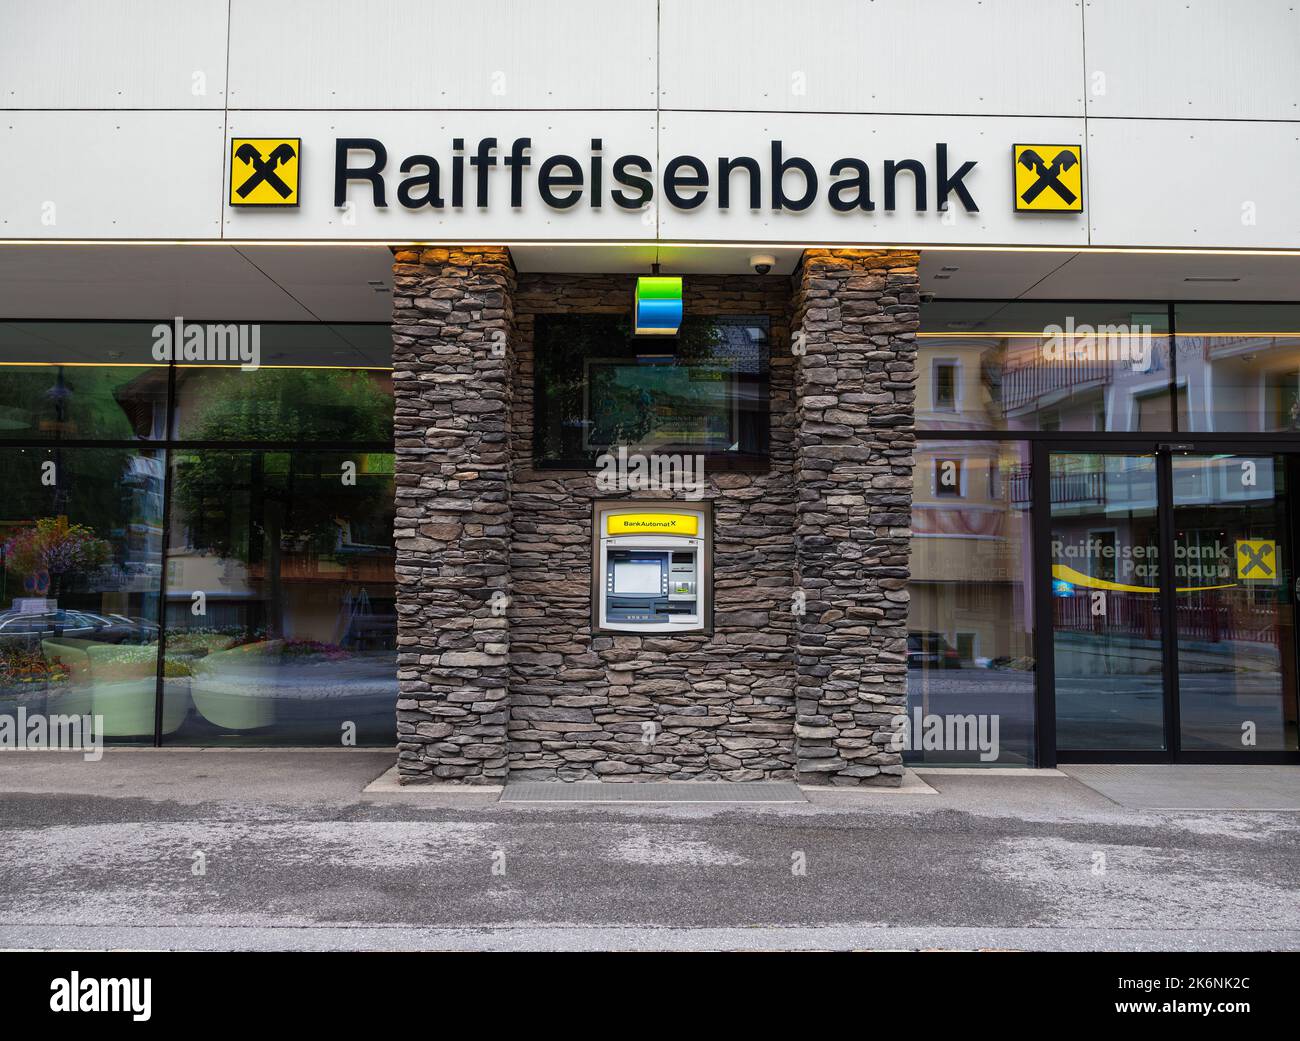 Raiffeisen bank austria hi-res stock photography and images - Alamy